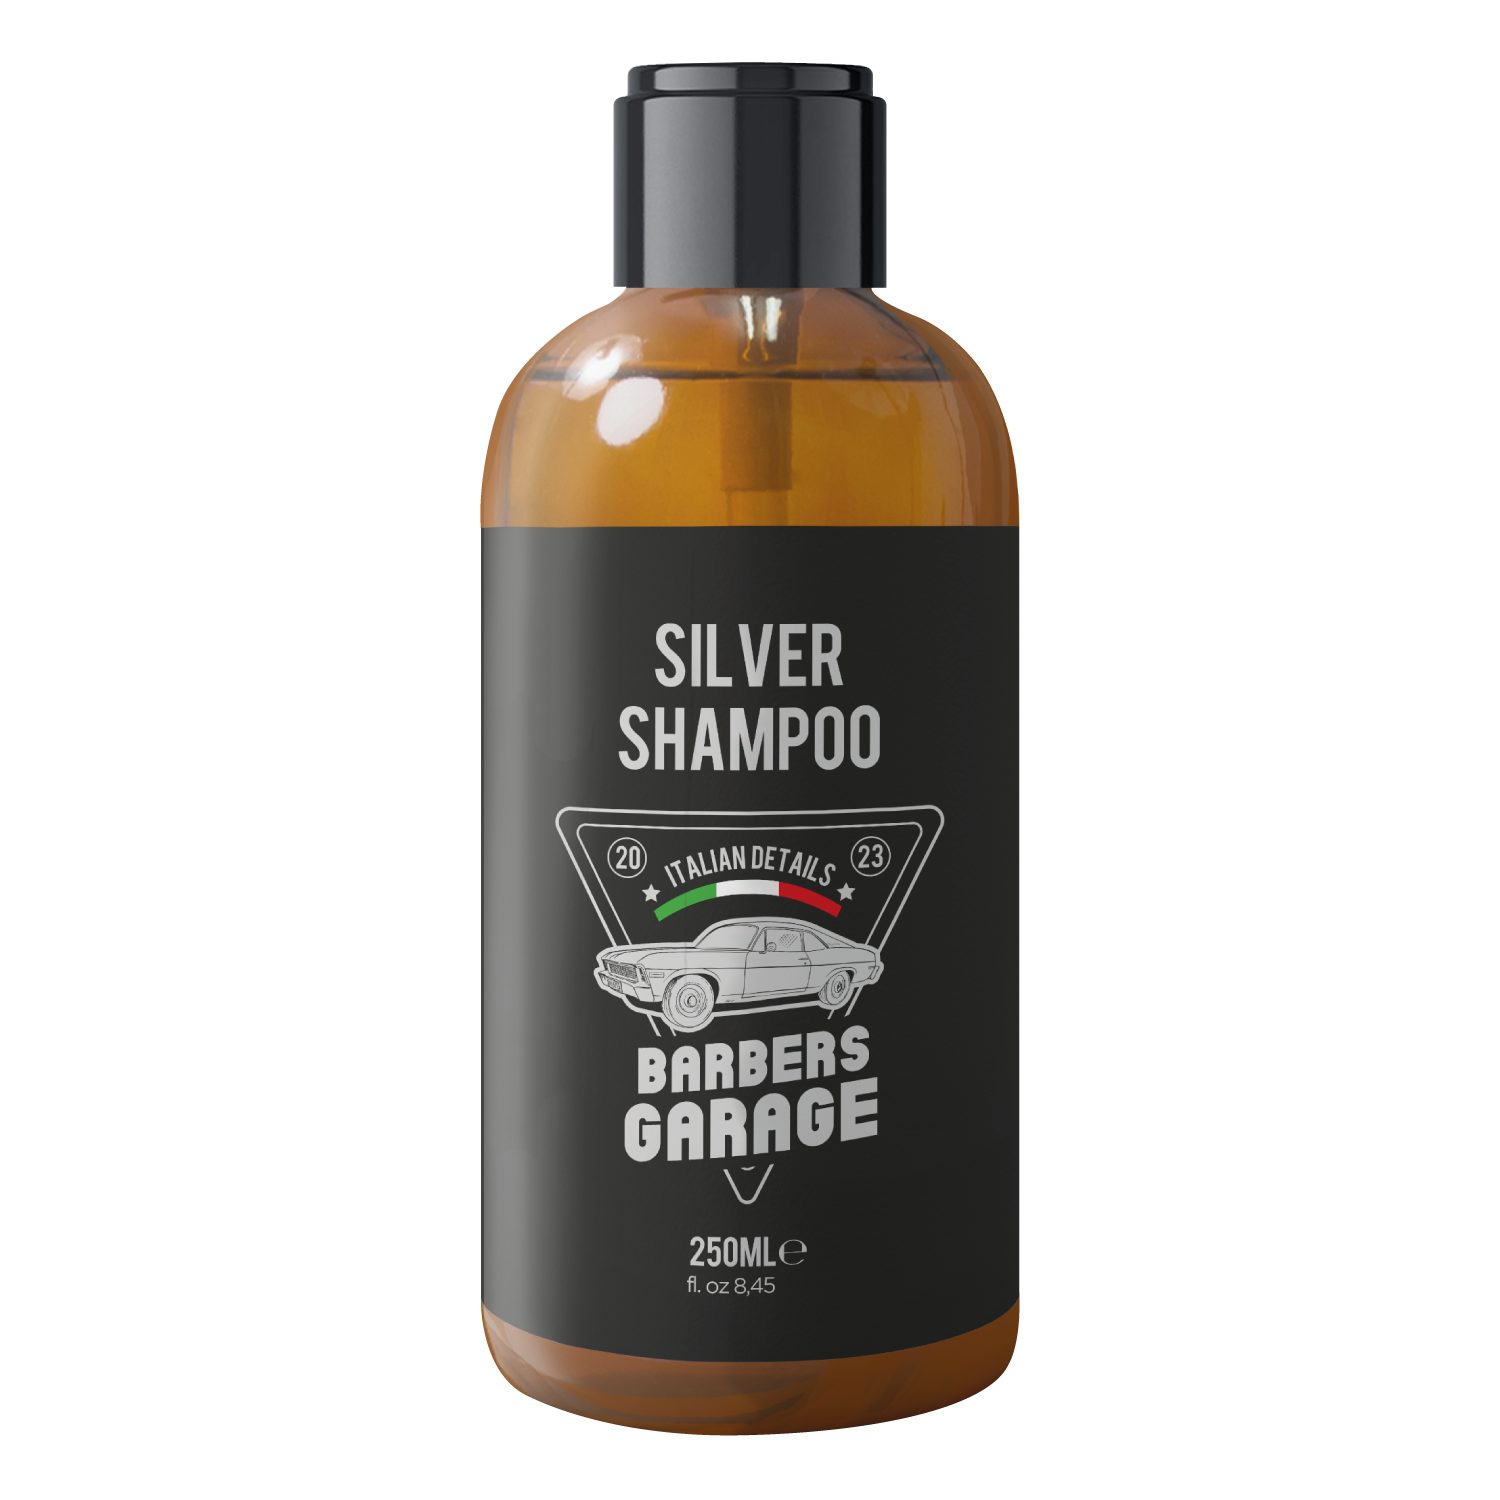 Veana Silbershampoo Barbers Garage exklusives Silber Shampoo (250ml) | Haarshampoos